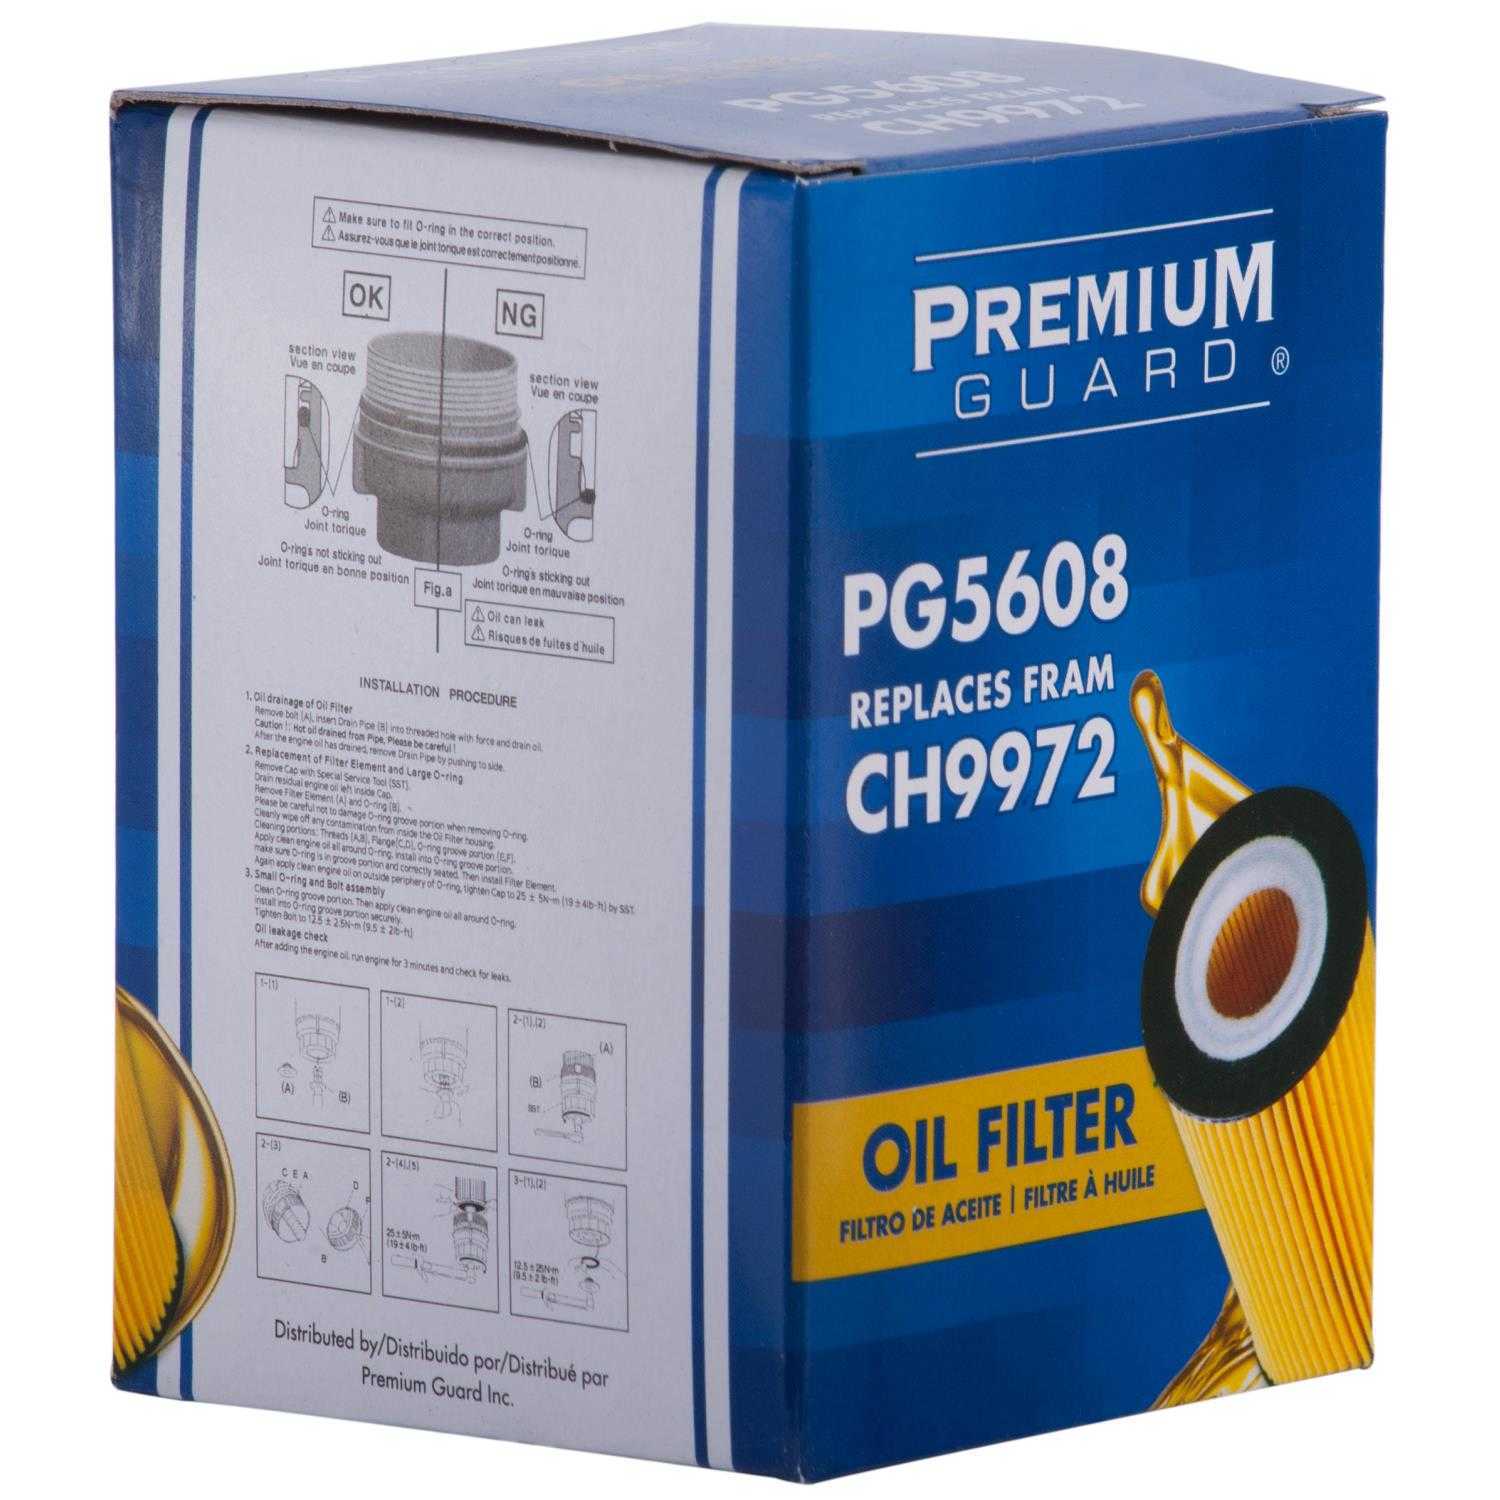 PREMIUM GUARD - Standard Life Oil Filter - PRG PG5608